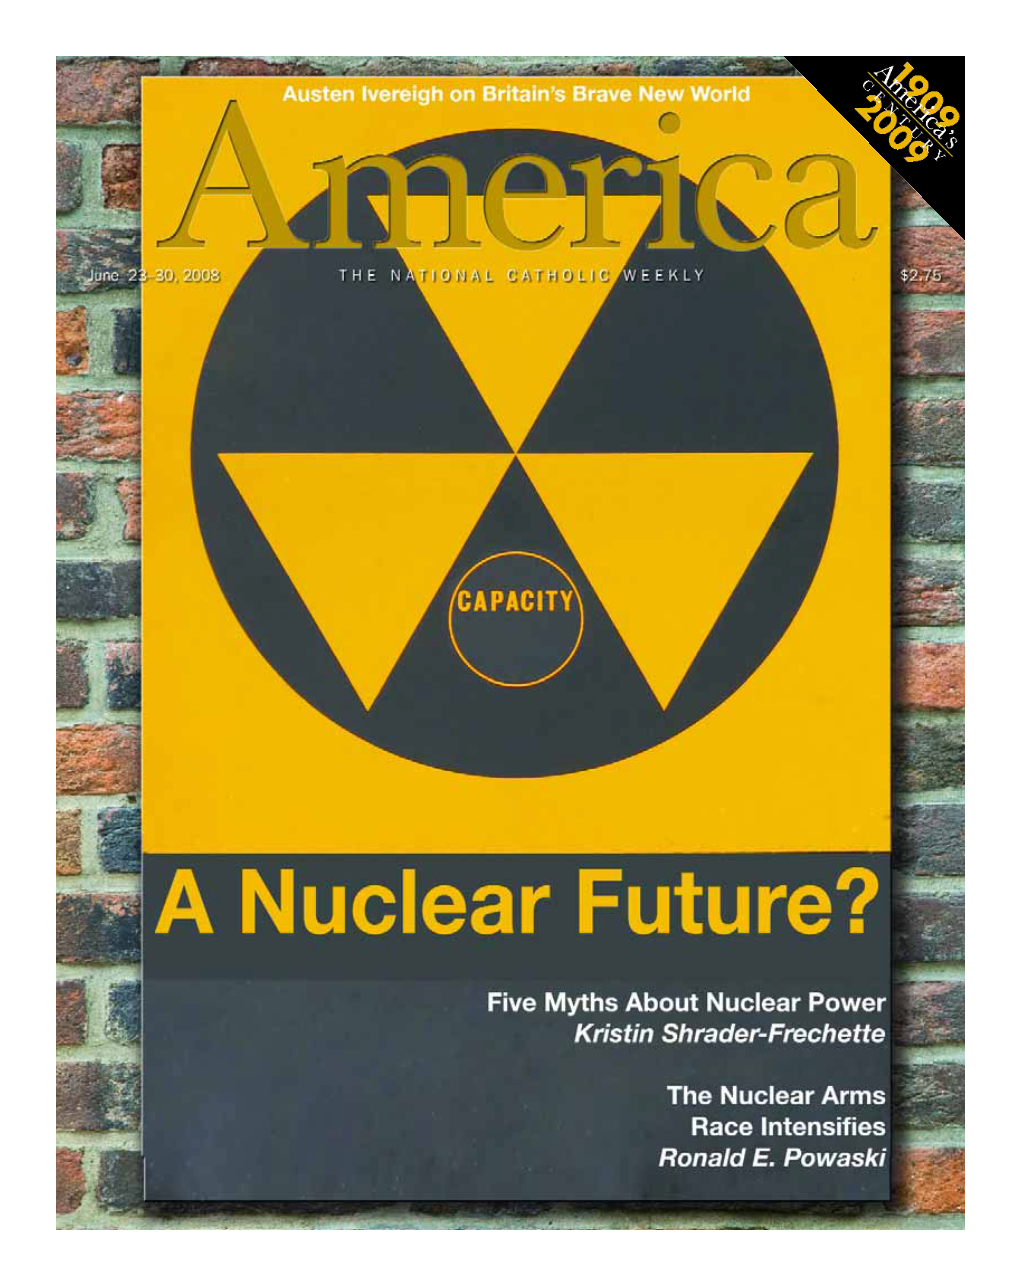 Five Myths About Nuclear Energy 12 21 Kristin Shrader-Frechette the New Nuclear Threat 17 Ronald E